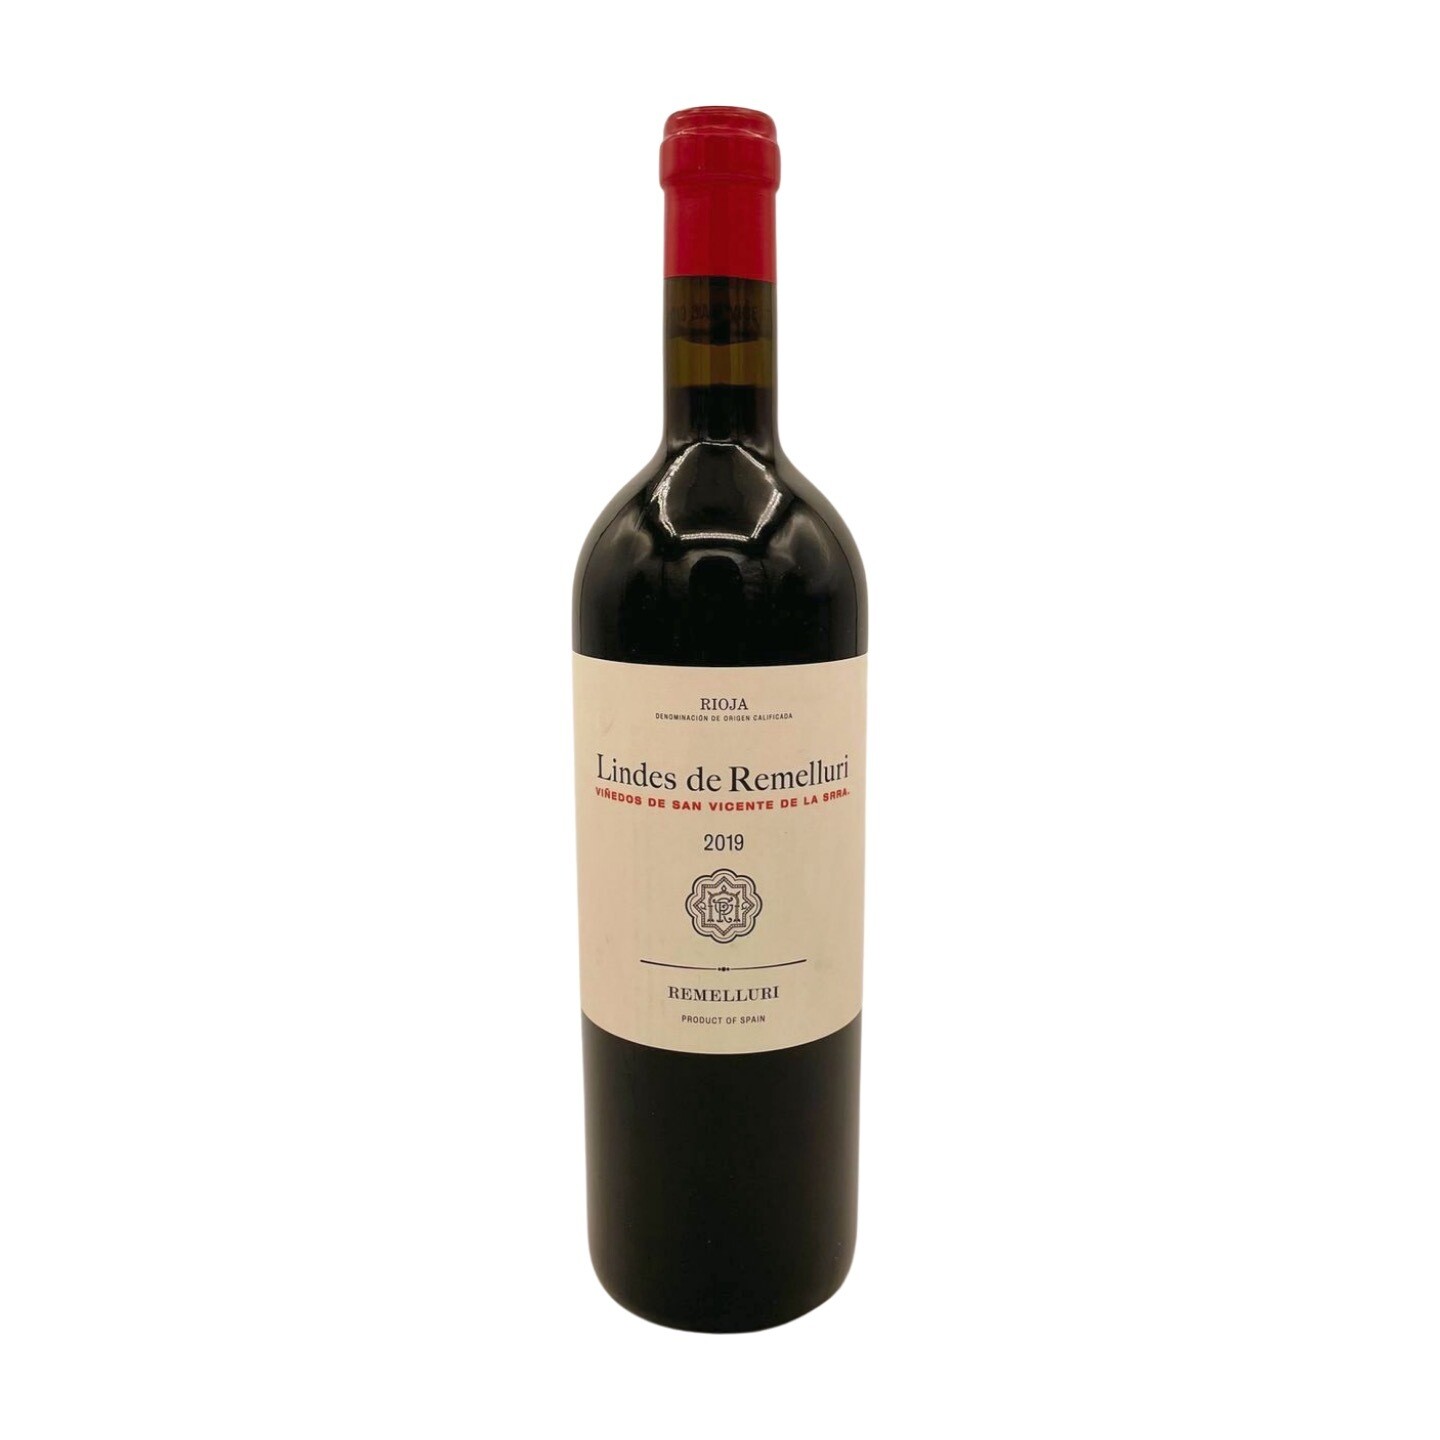 Remelluri 'Lindes de Remelluri' Vinedos de San Vicente Rioja 2019